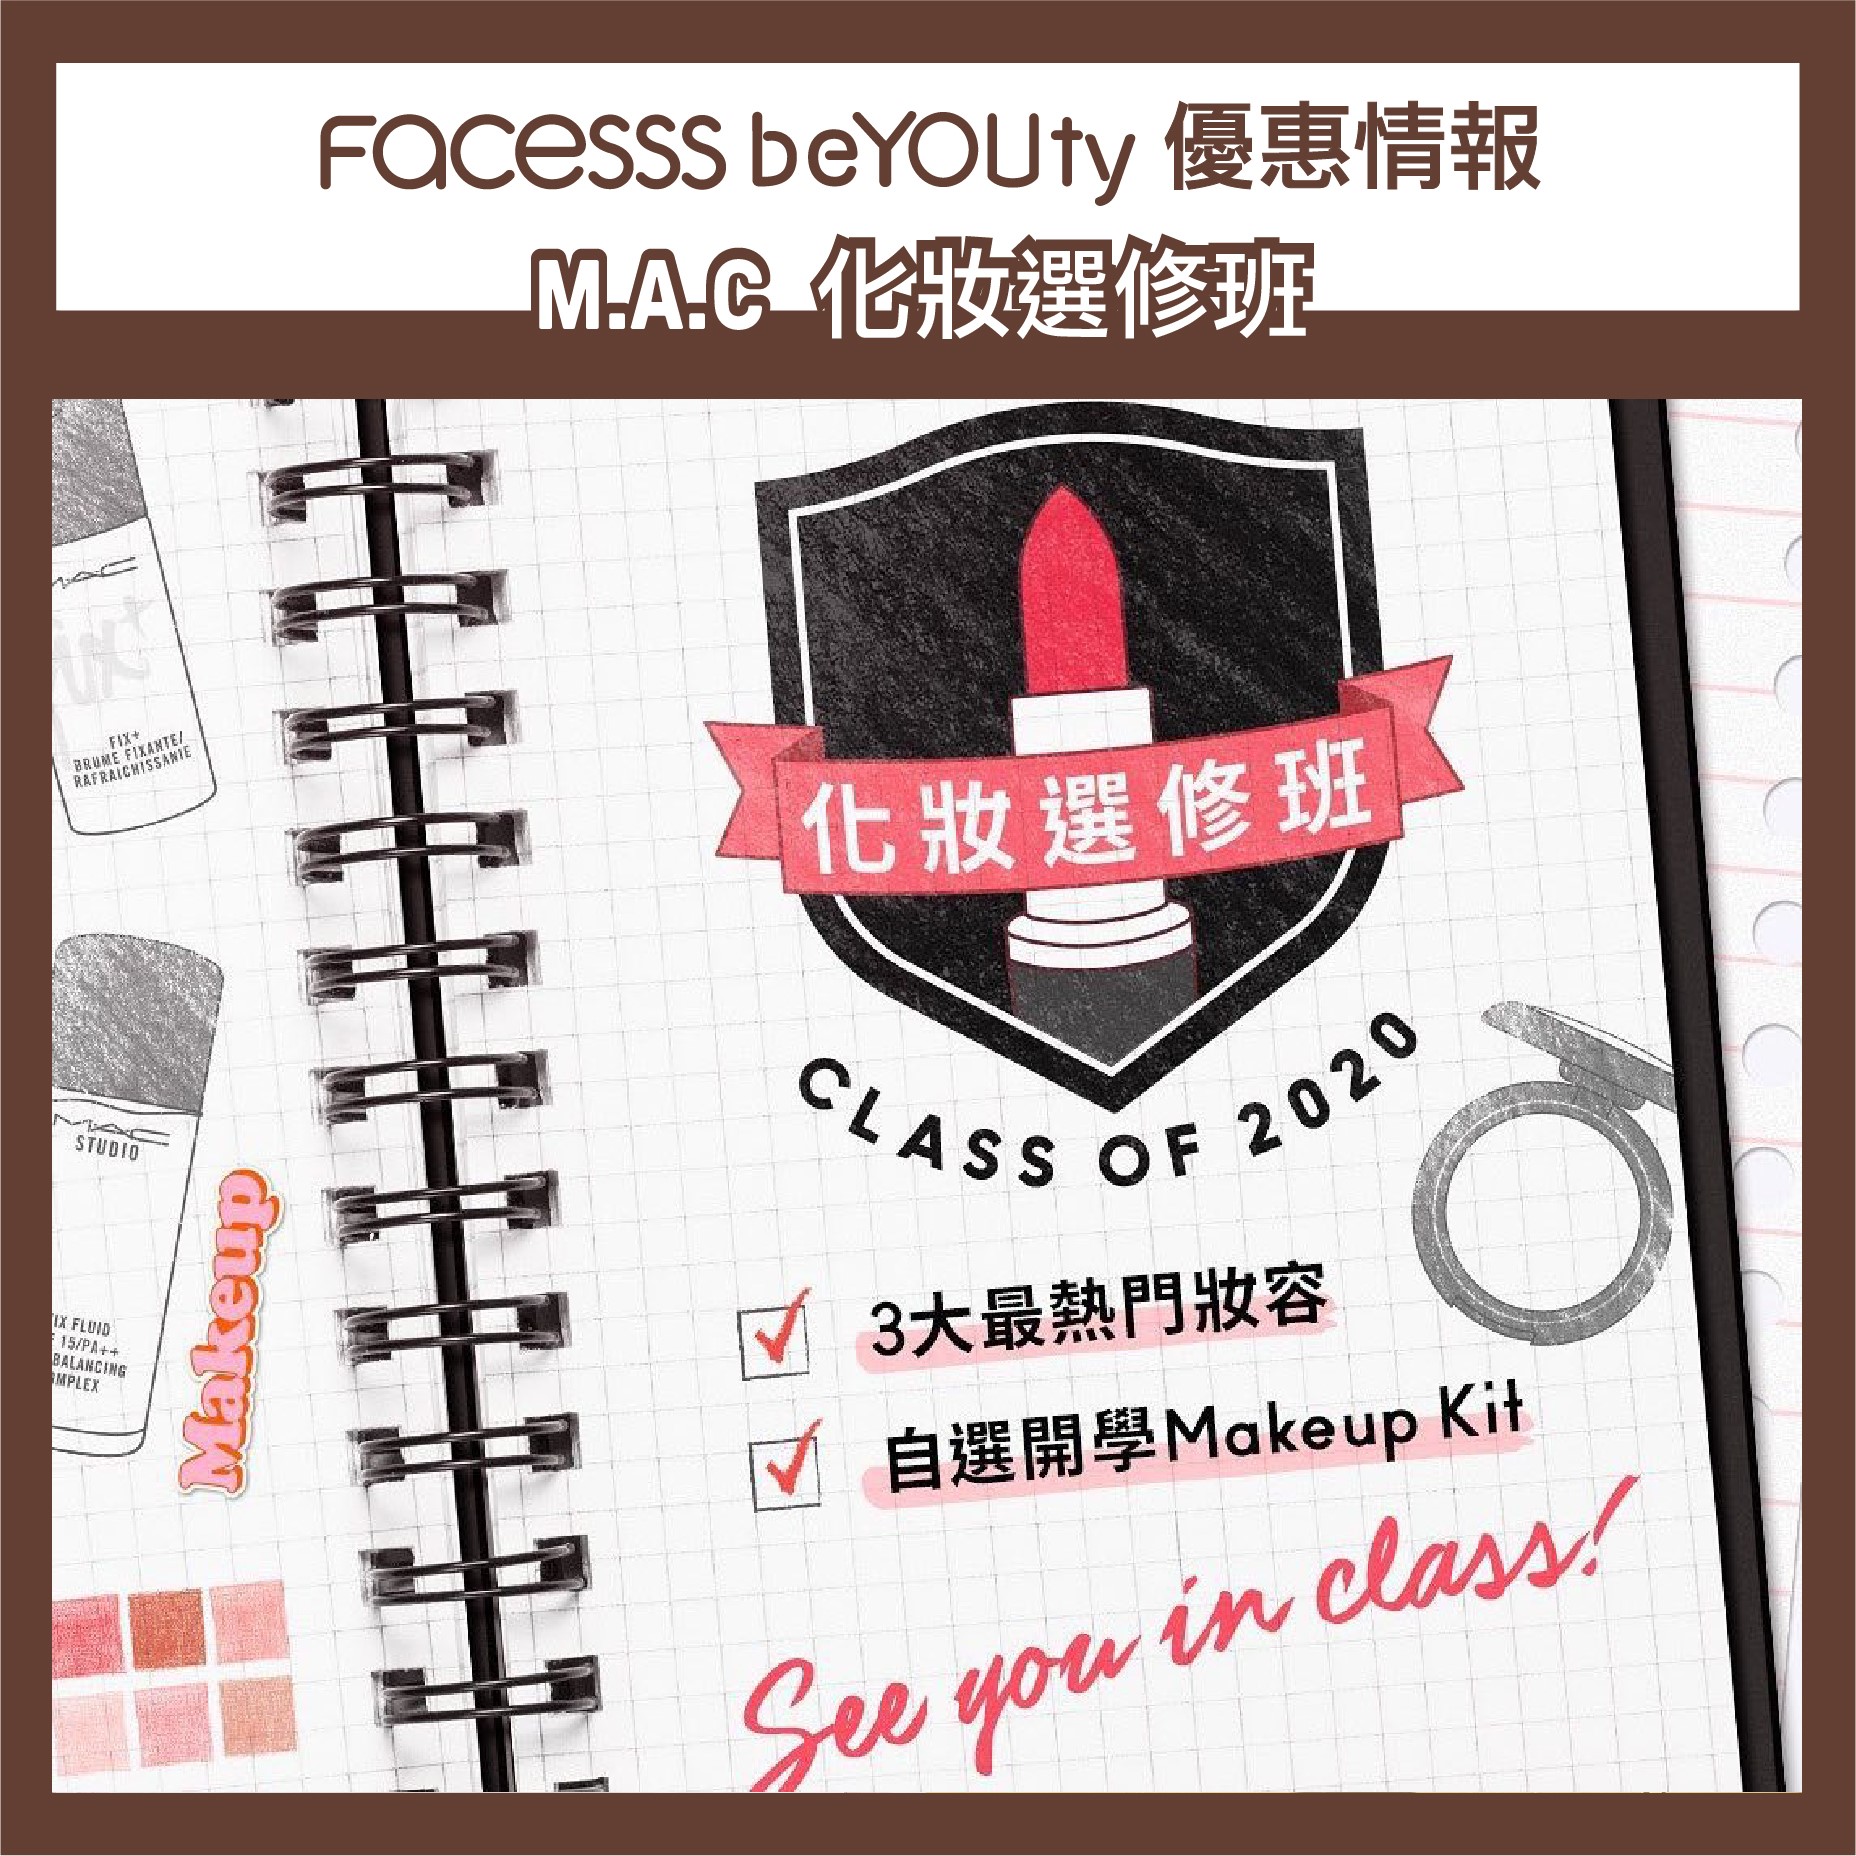 Facesss 有獎遊戲送 M·A·C 化妝選修班 + Makeup Kit